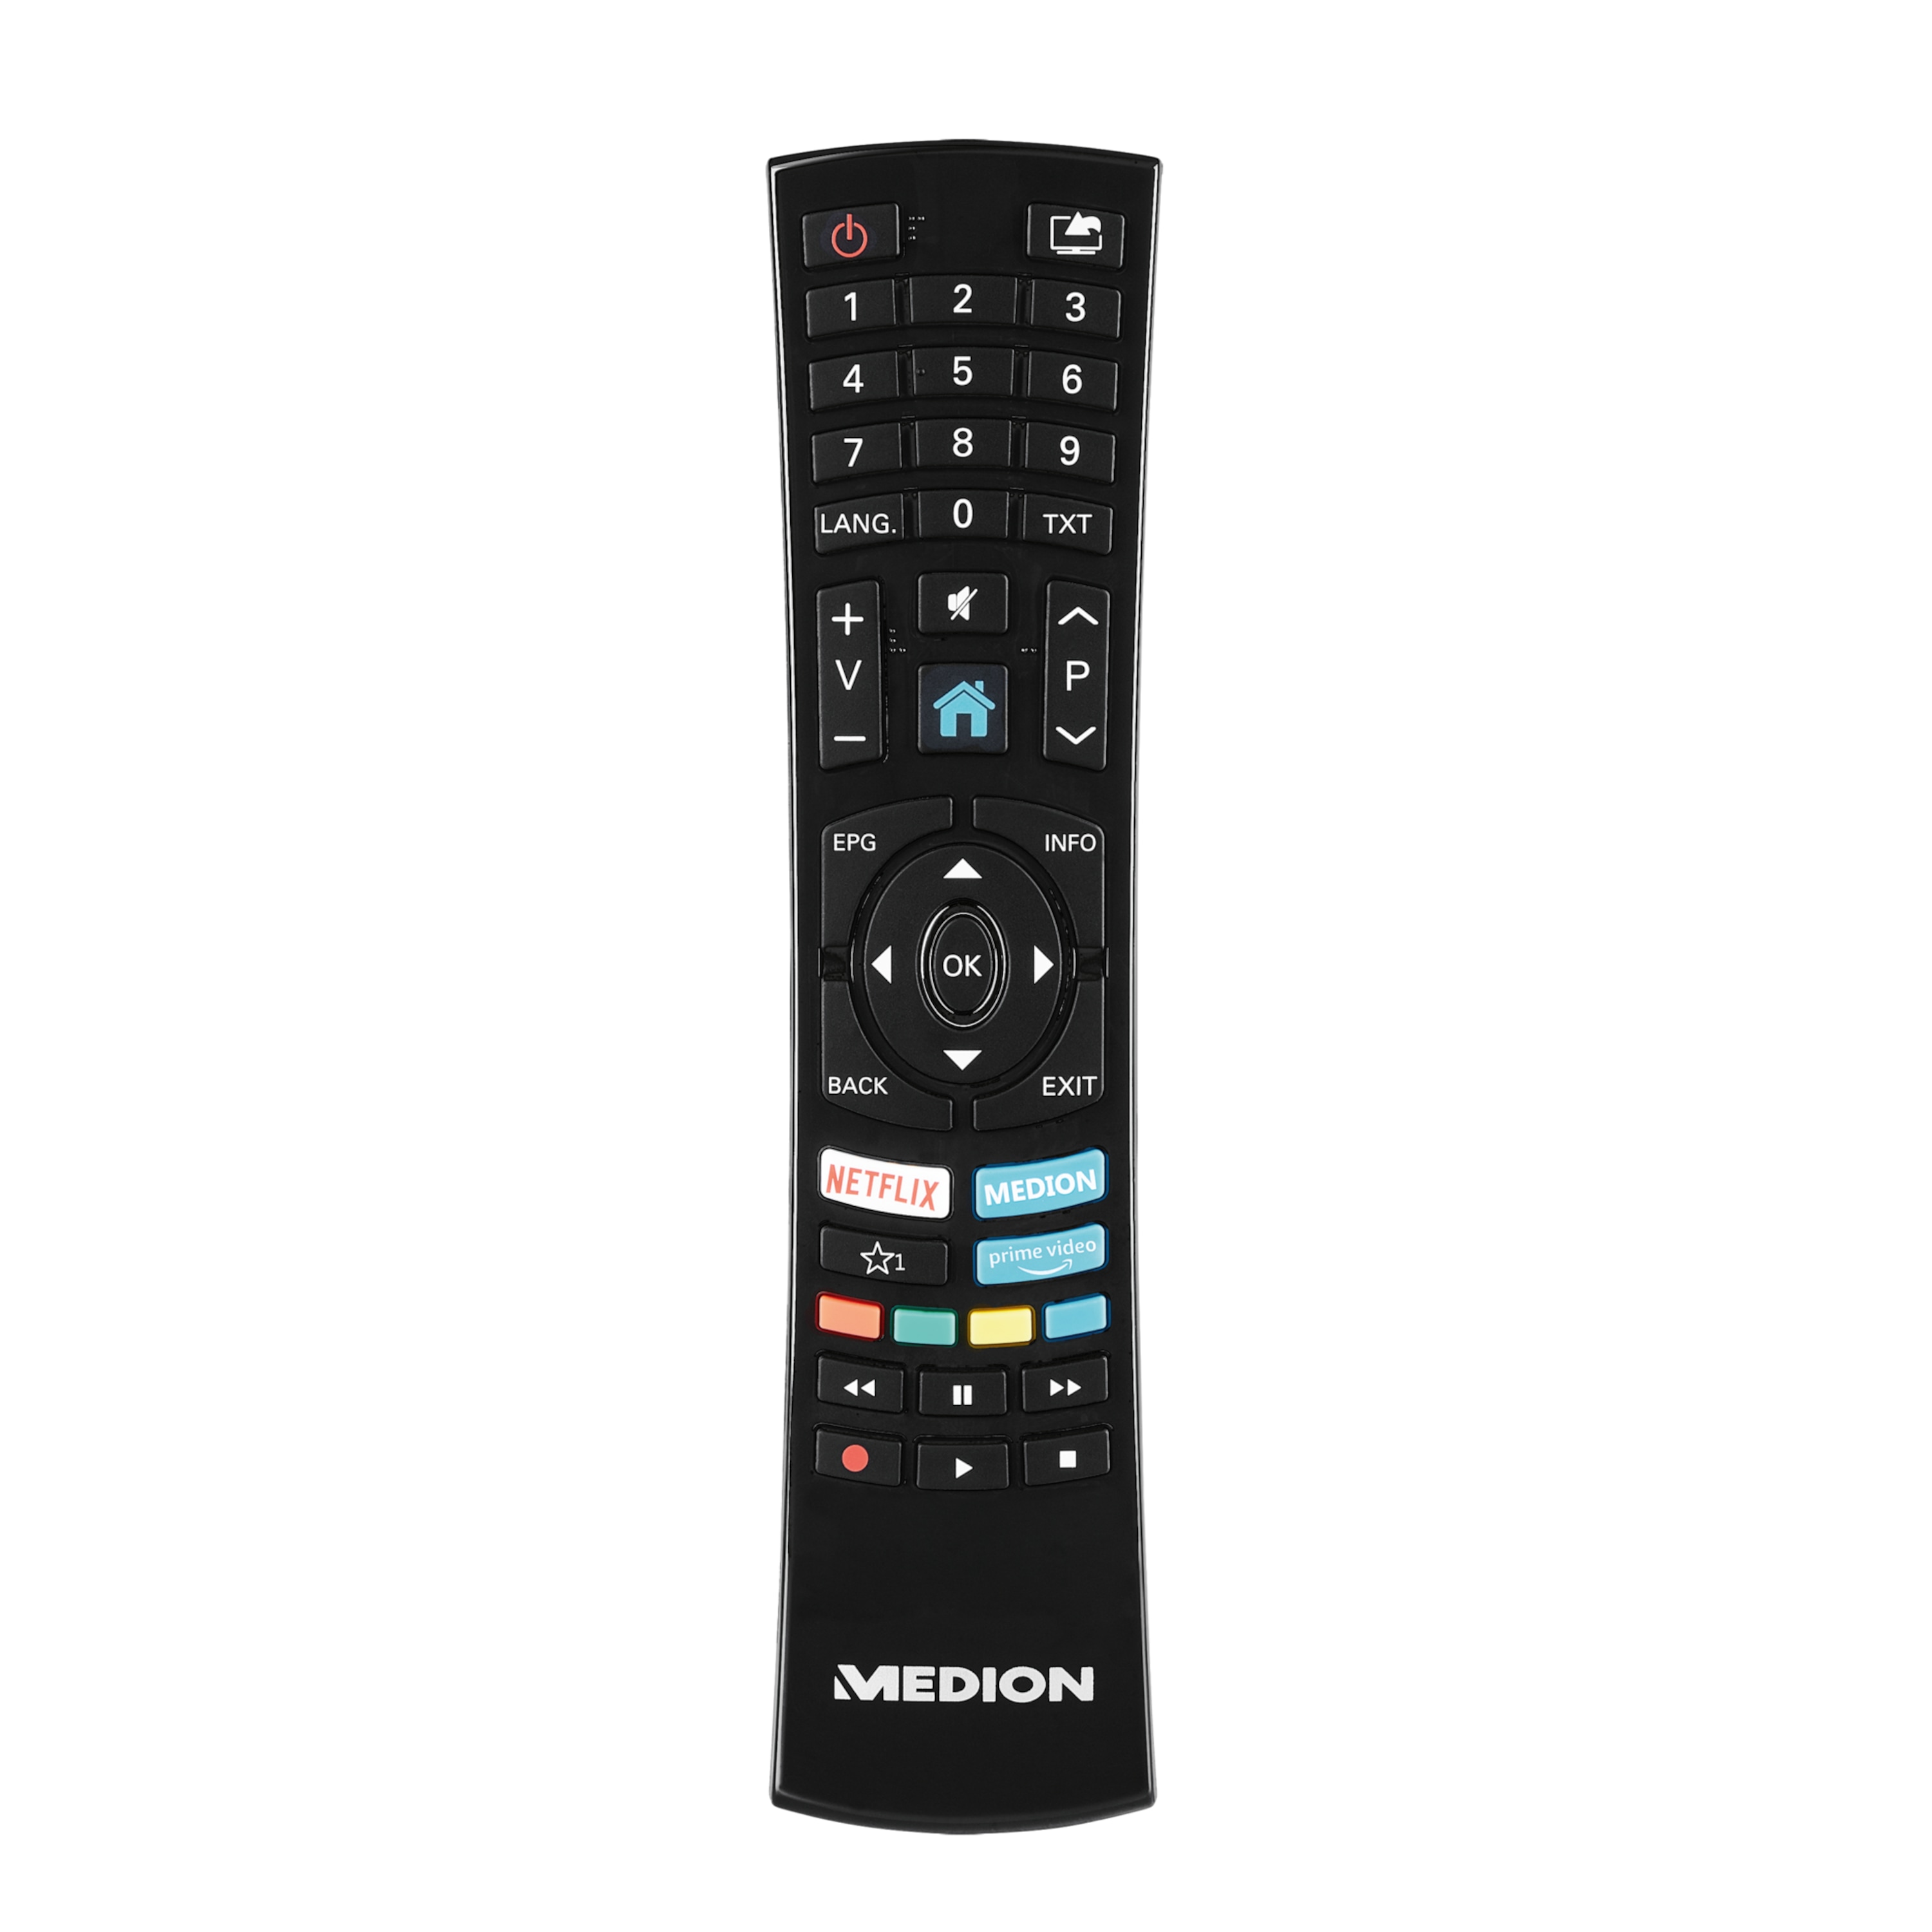 MEDION® LIFE® X15055 (MD 31567)  LCD Smart-TV, 125,7 cm (50'') Ultra HD + MEDION® LIFE® P64377 3.1.2.  Soundbar - ARTIKELSET